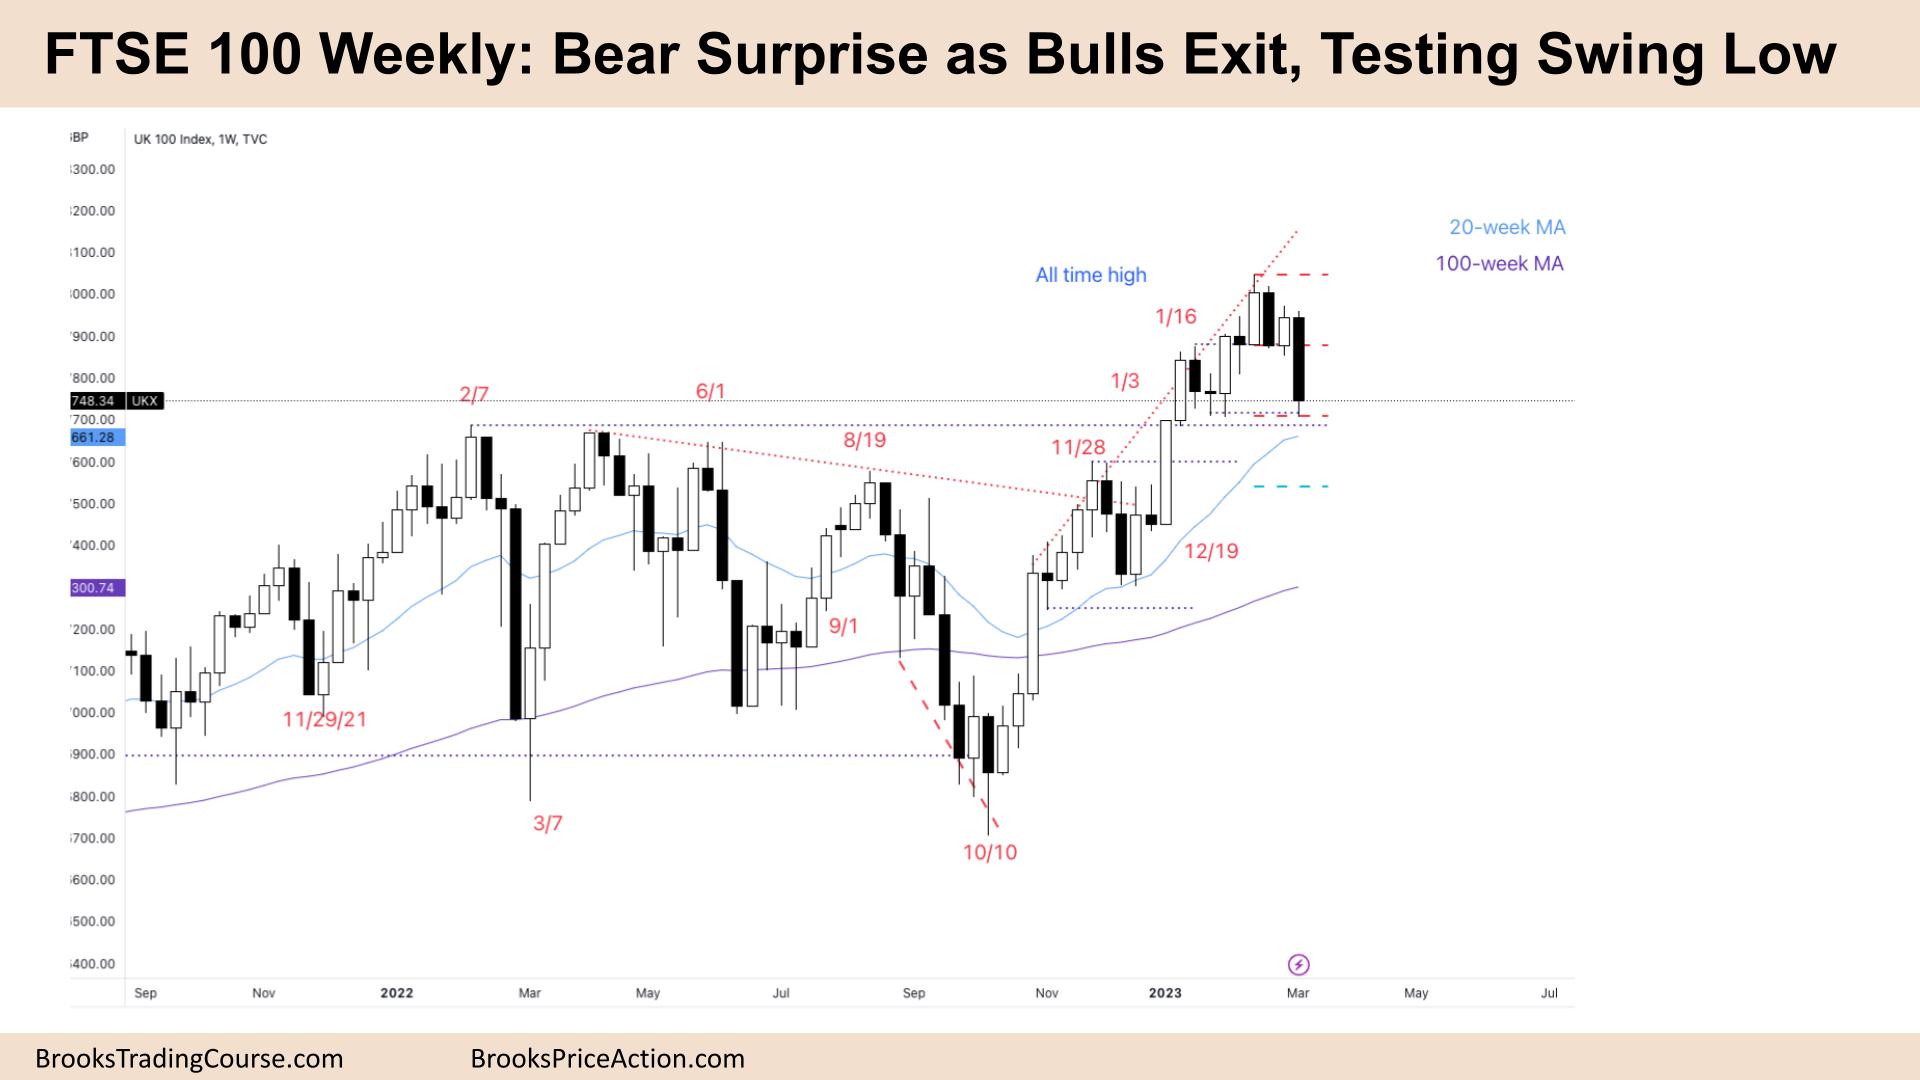 FTSE 100 Big Bear Surprise as Bulls Exit, Testing Swing Low